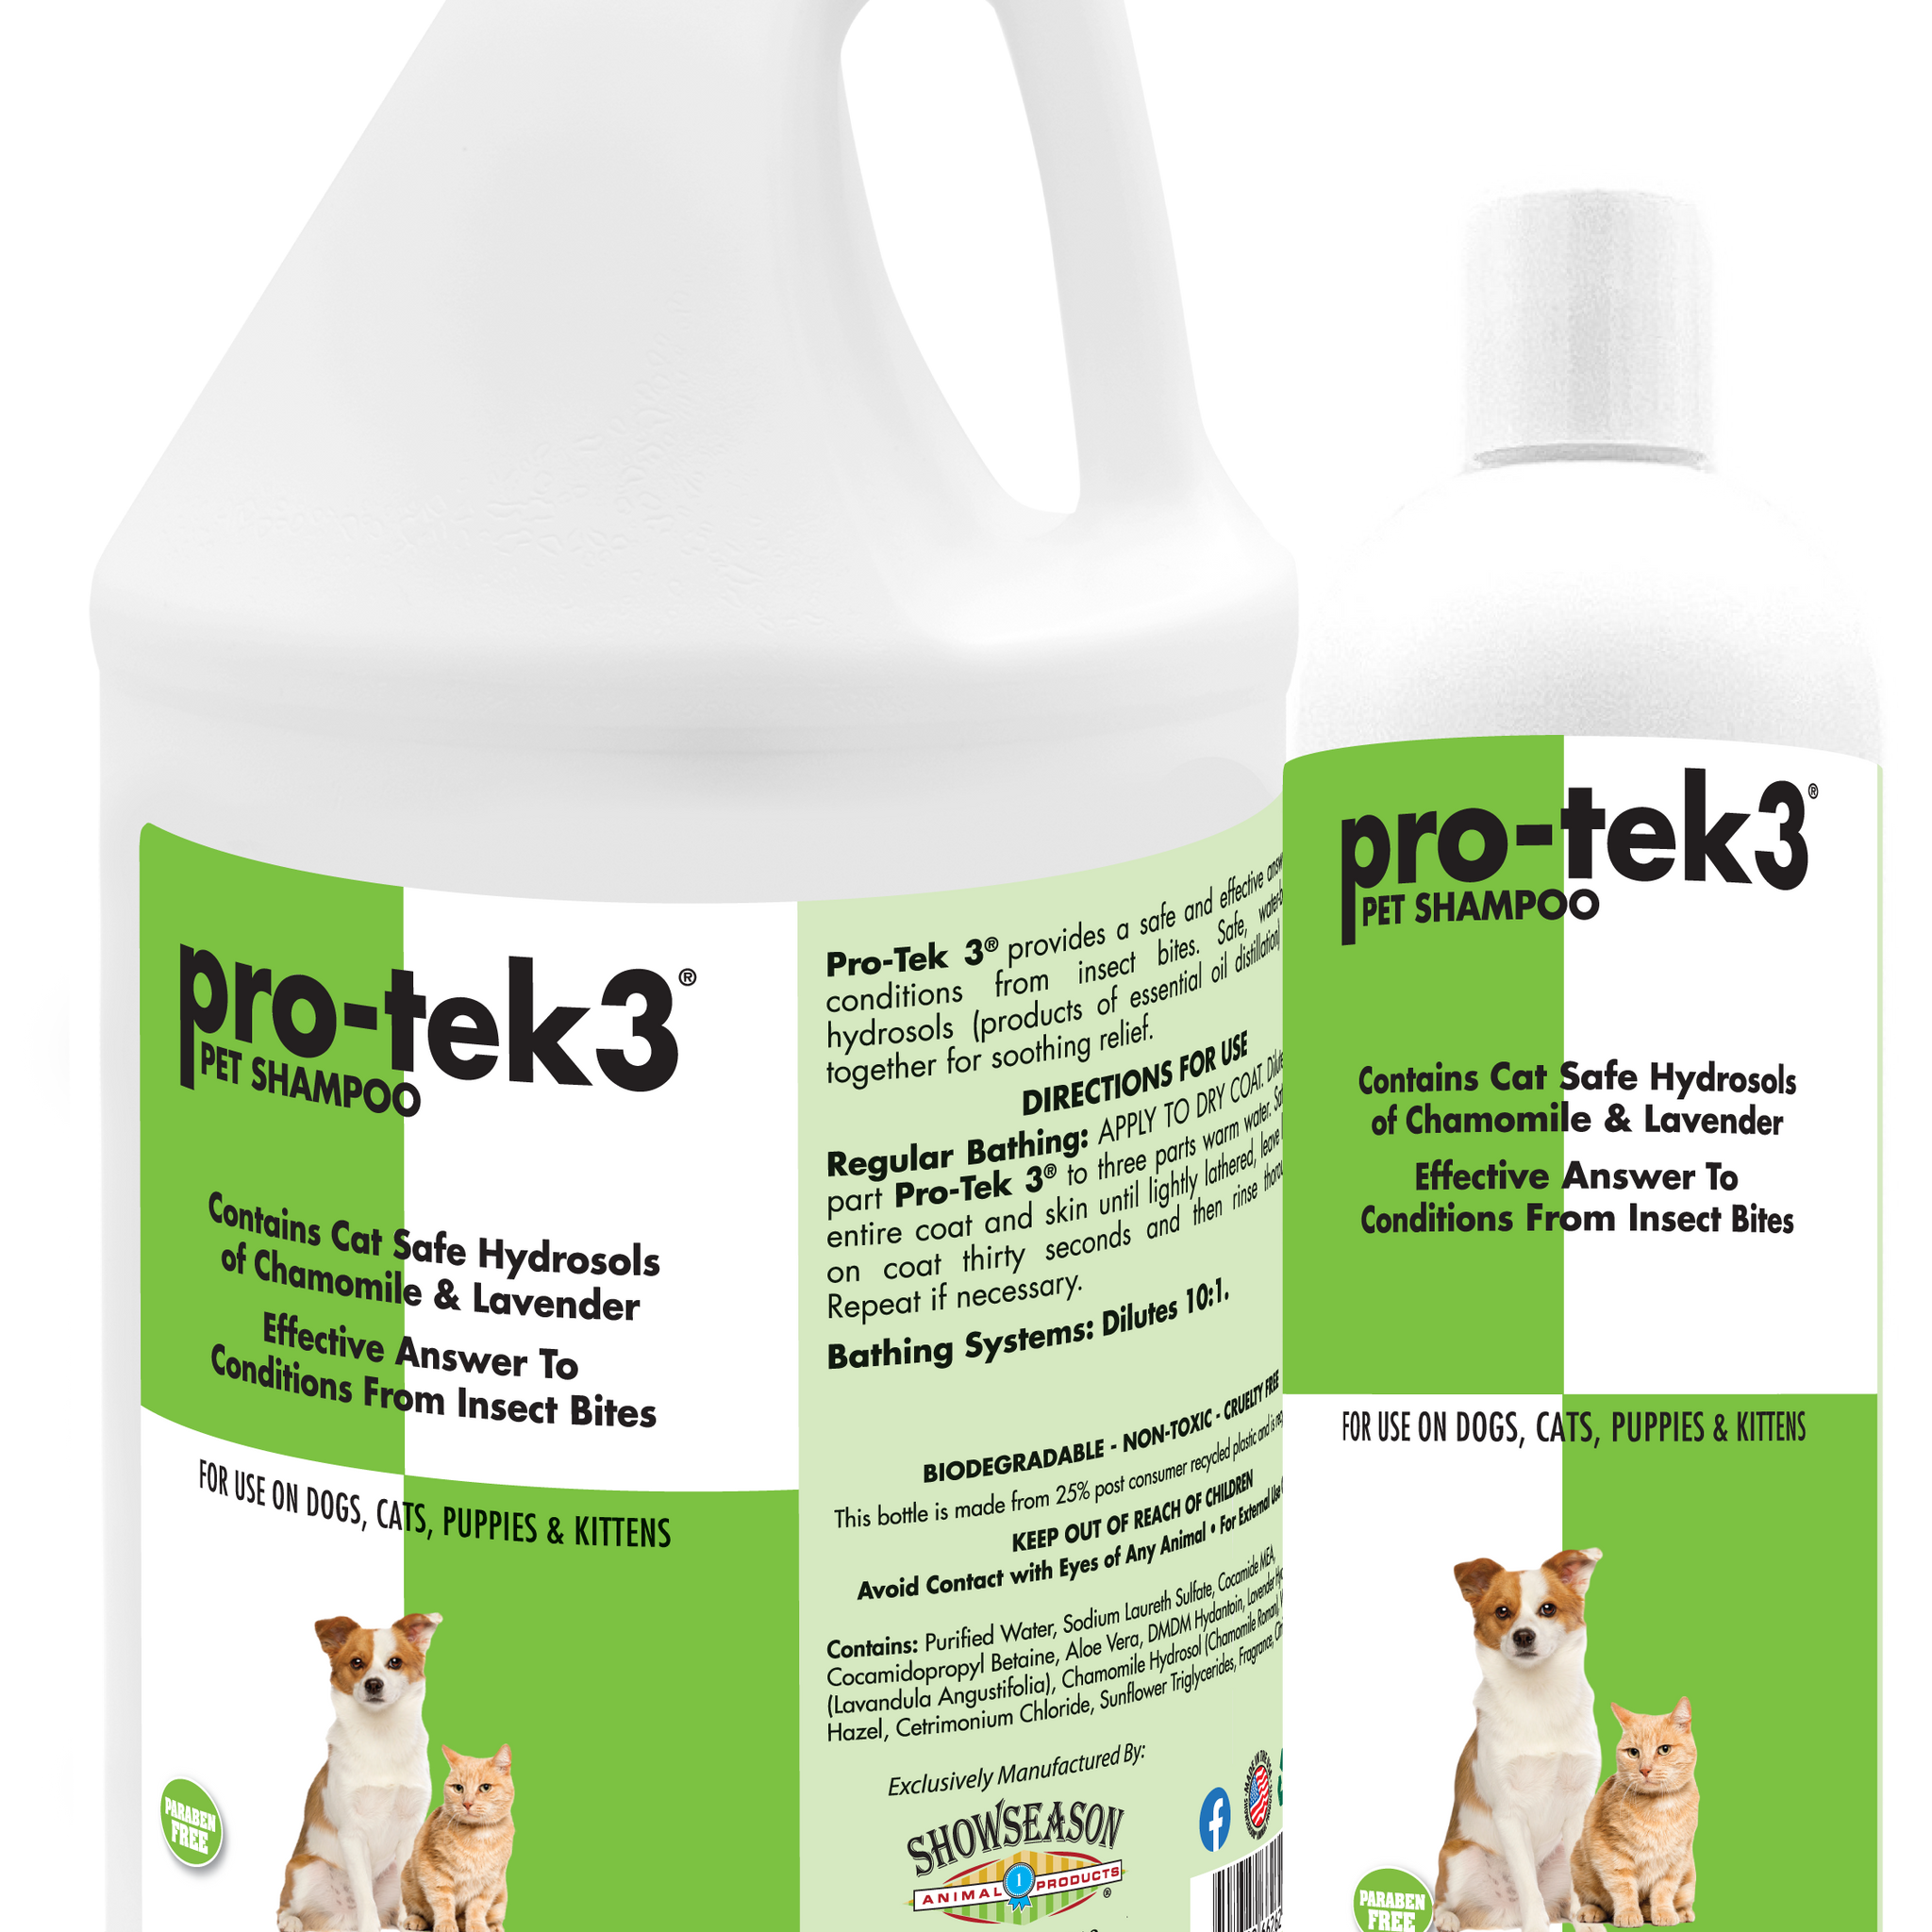 Pro-Tek 3® PESTICIDE FREE Pet Shampoo | Showseason®